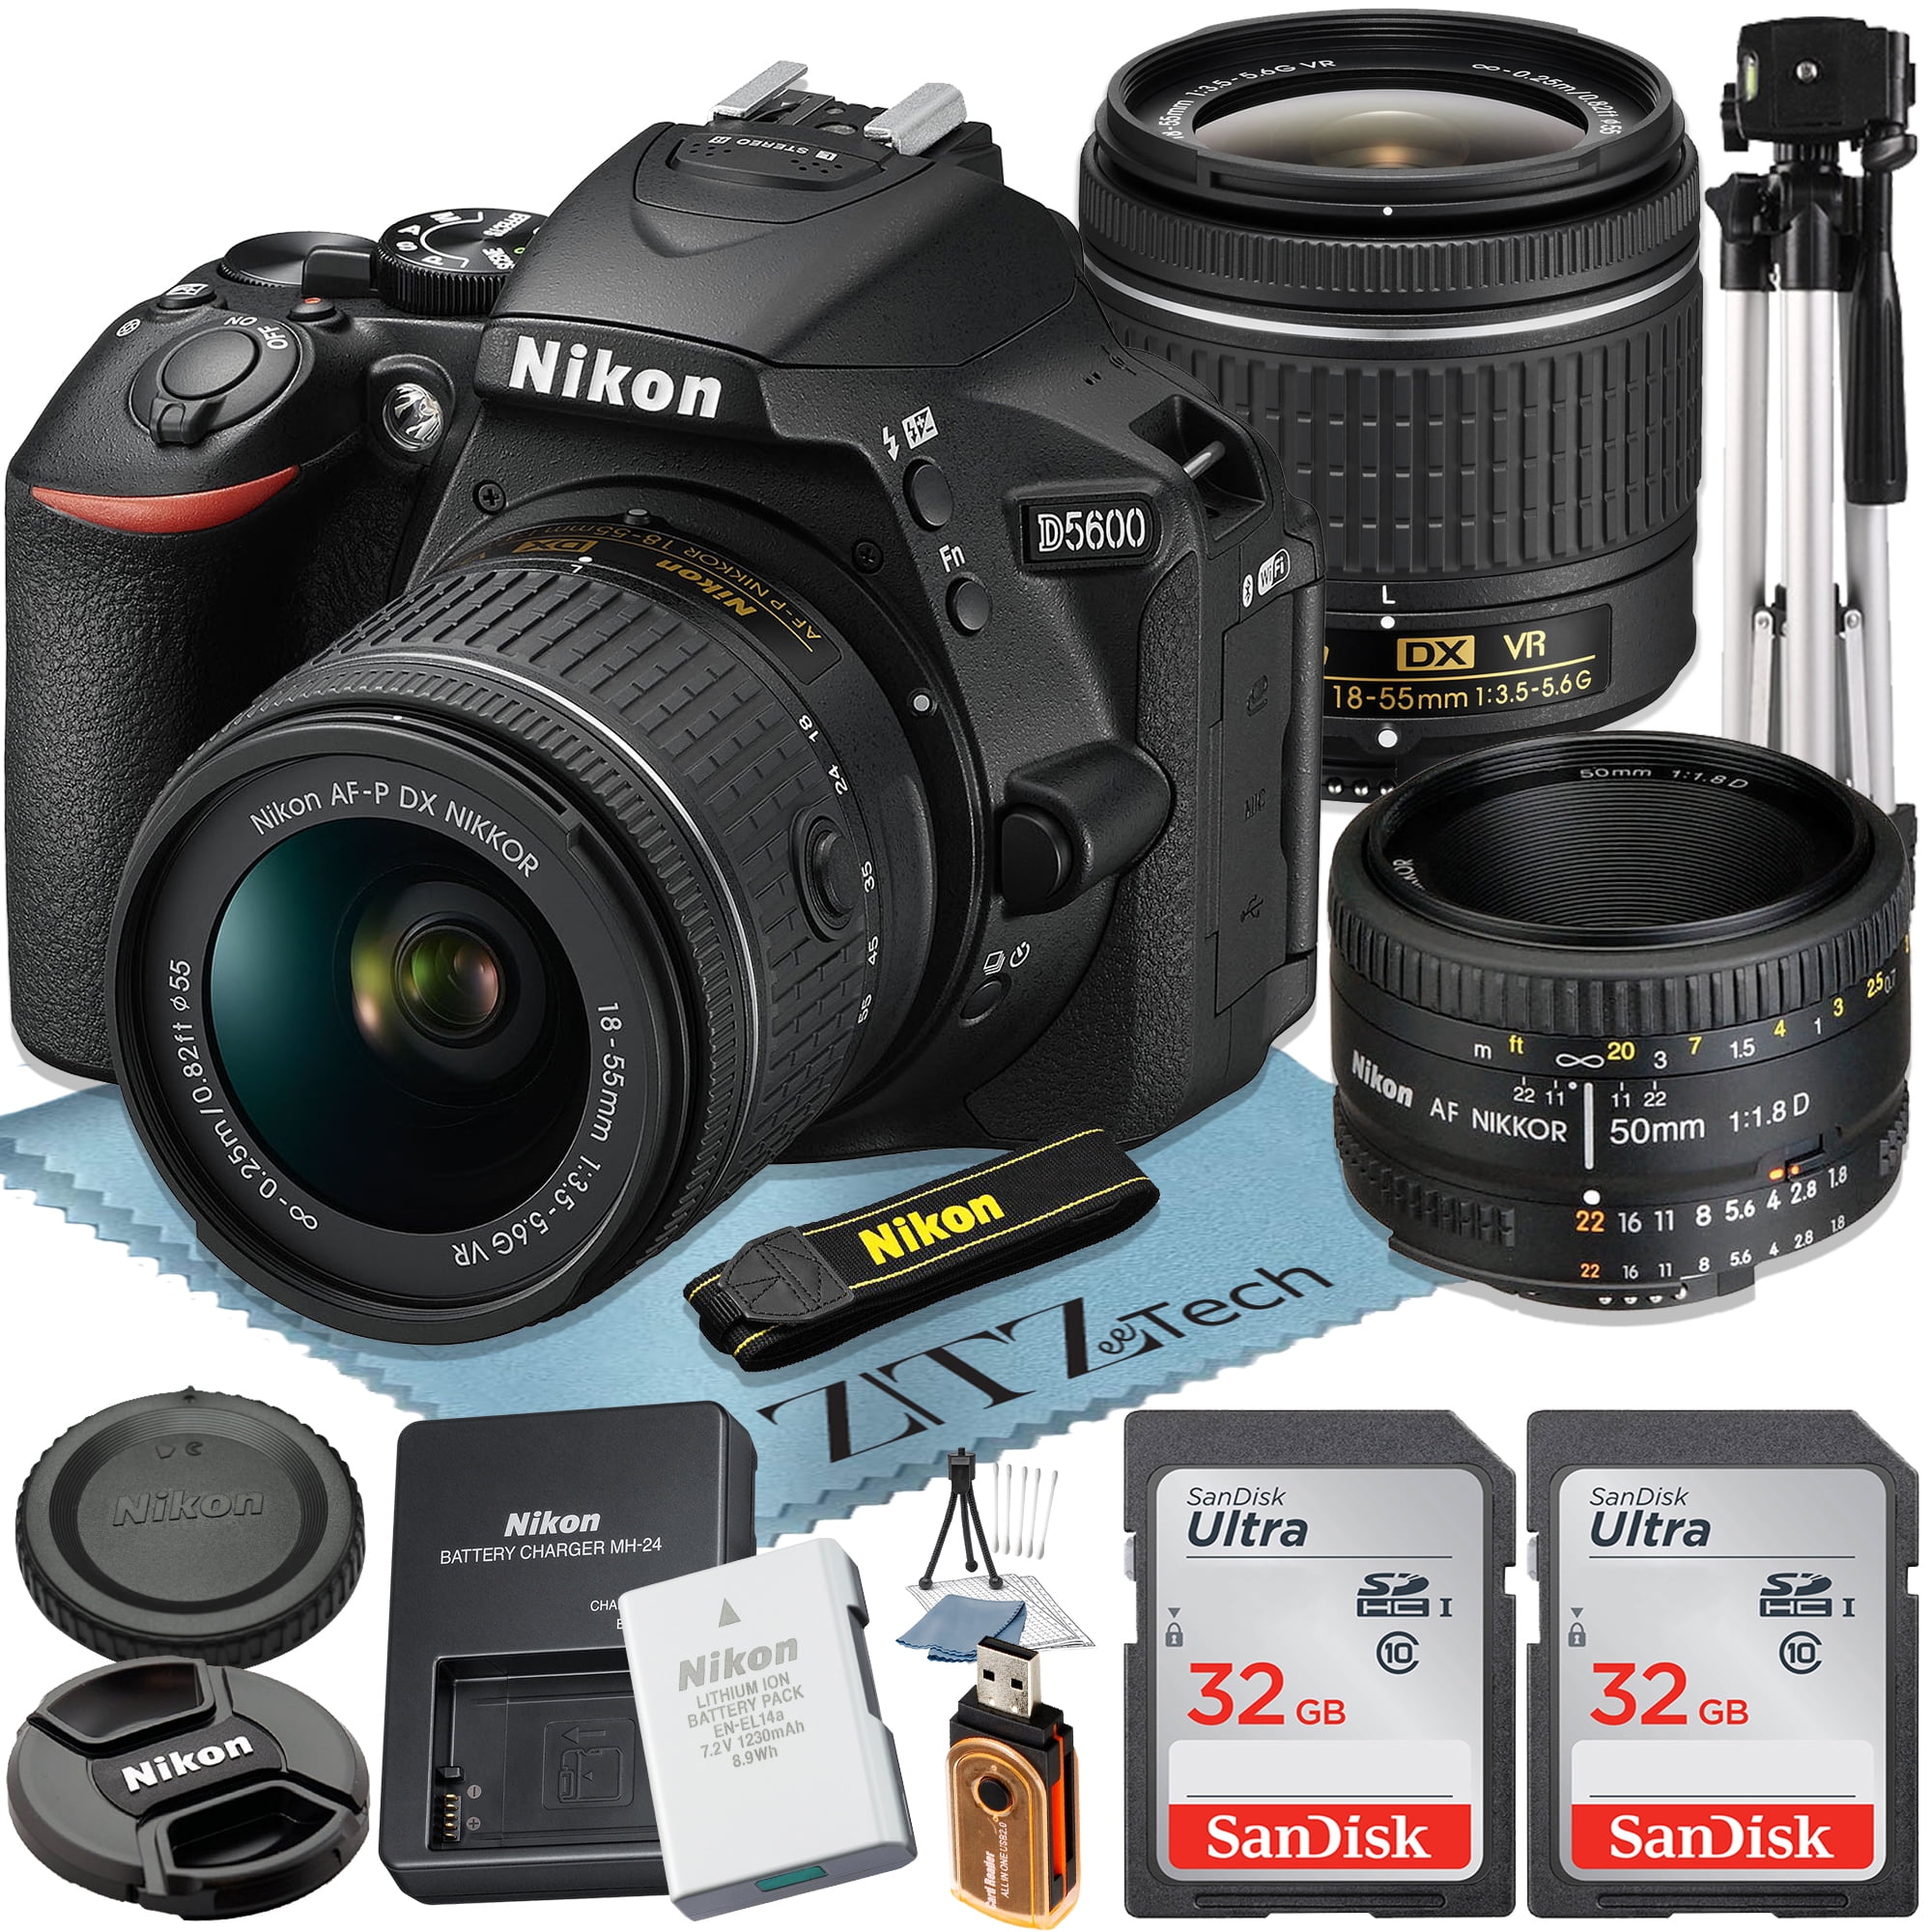 Nikon D5500 Digital SLR Camera with 24.2 Megapixels with 18-55mm 